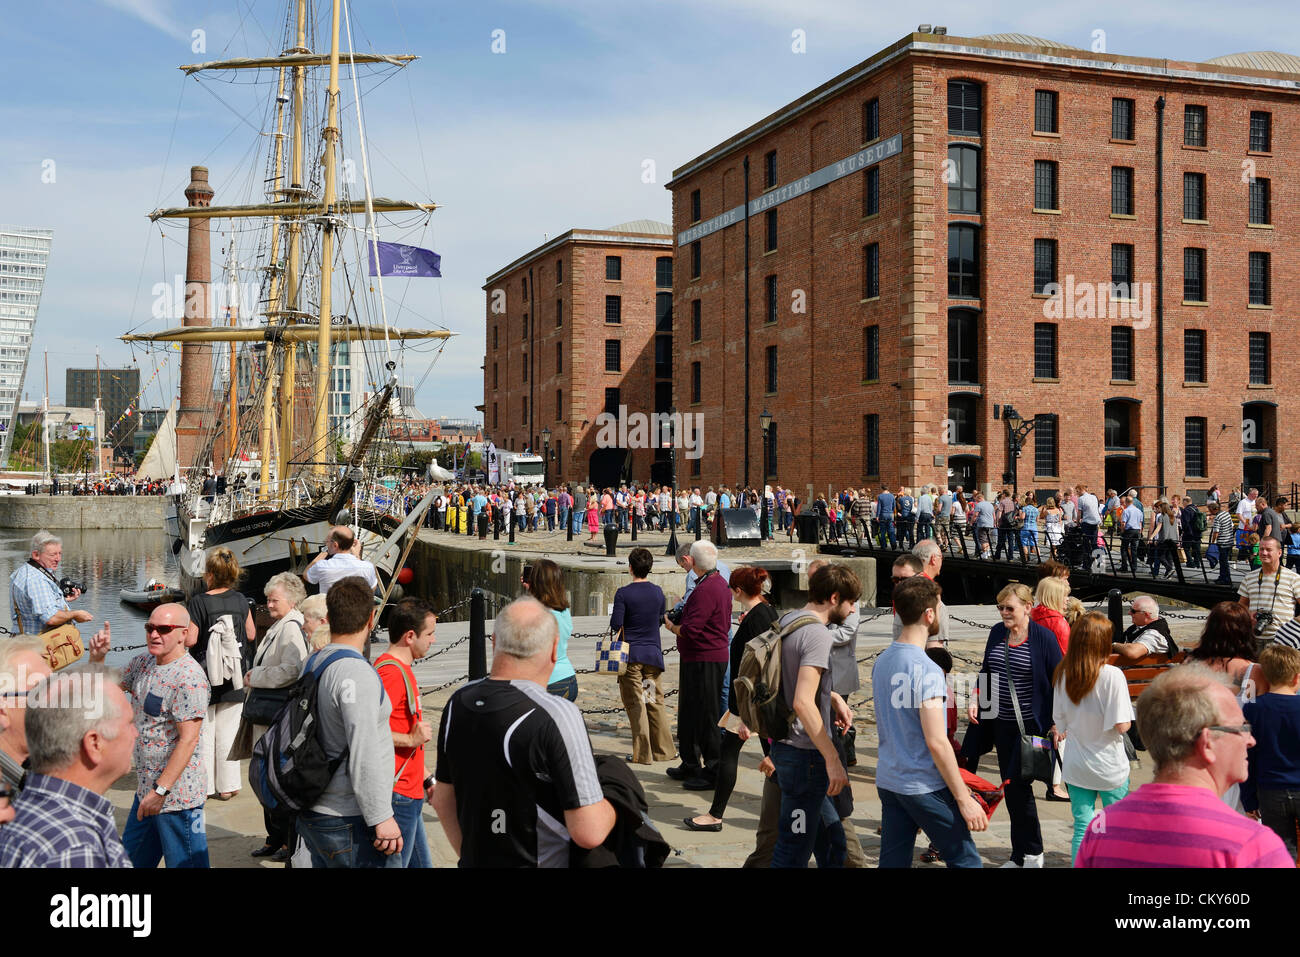 Samedi 1er septembre 2012. Liverpool, Royaume-Uni. La mer d'Irlande 2012 Tall Ships Regatta. Voir les foules de grands navires à l'Albert Dock, Liverpool. Banque D'Images